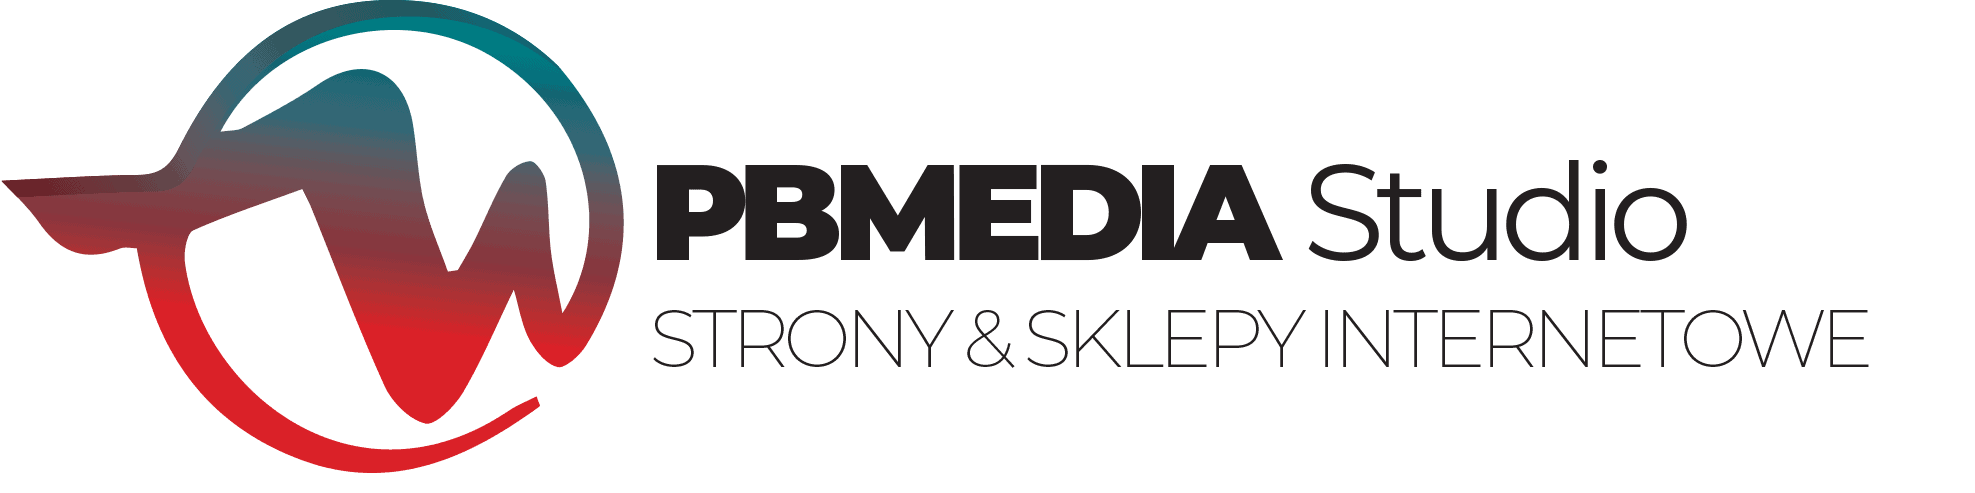 PB MEDIA Studio Strony & Sklepy Internetowe